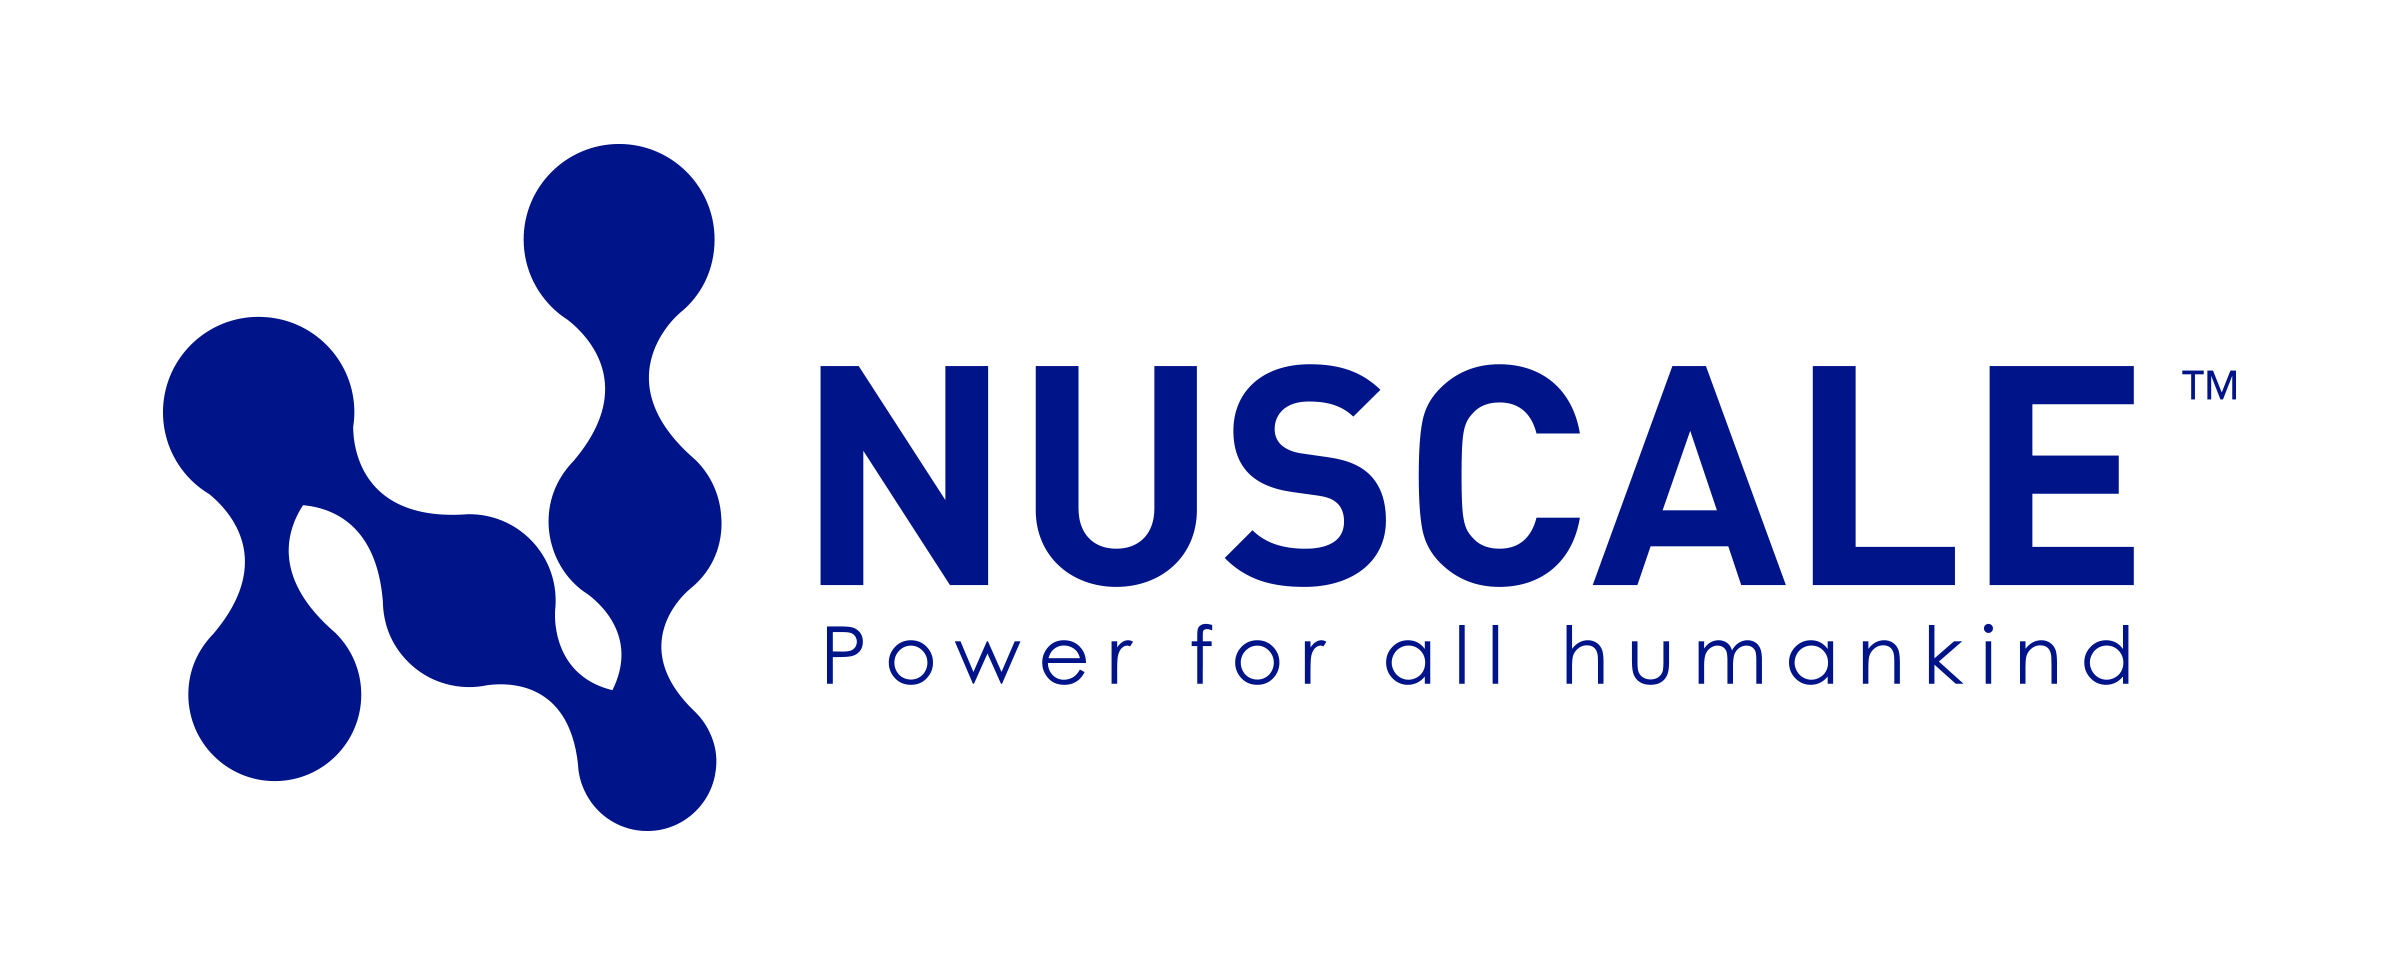 NuScale Power, LLC